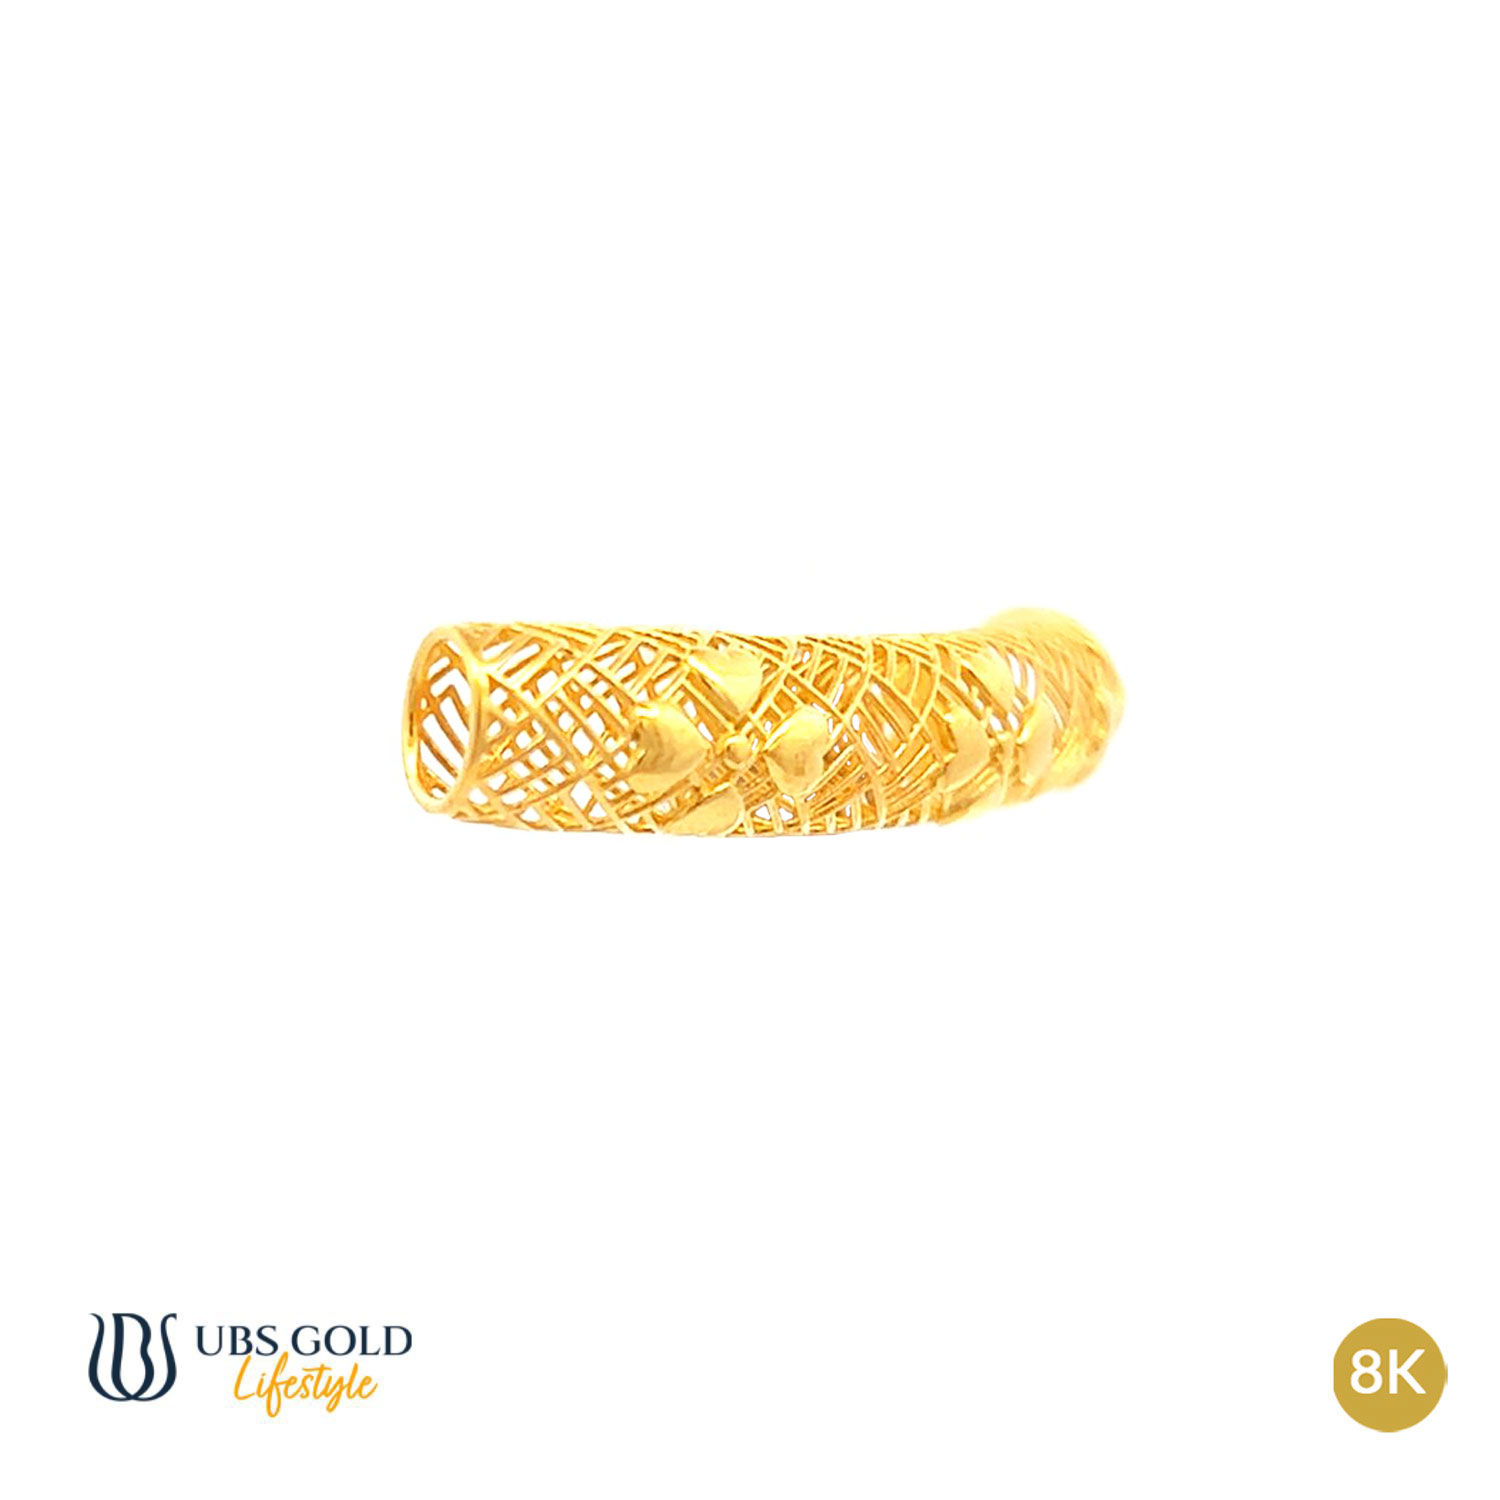 UBS Gold Liontin Emas Sakura - Cdm0182 - 8K